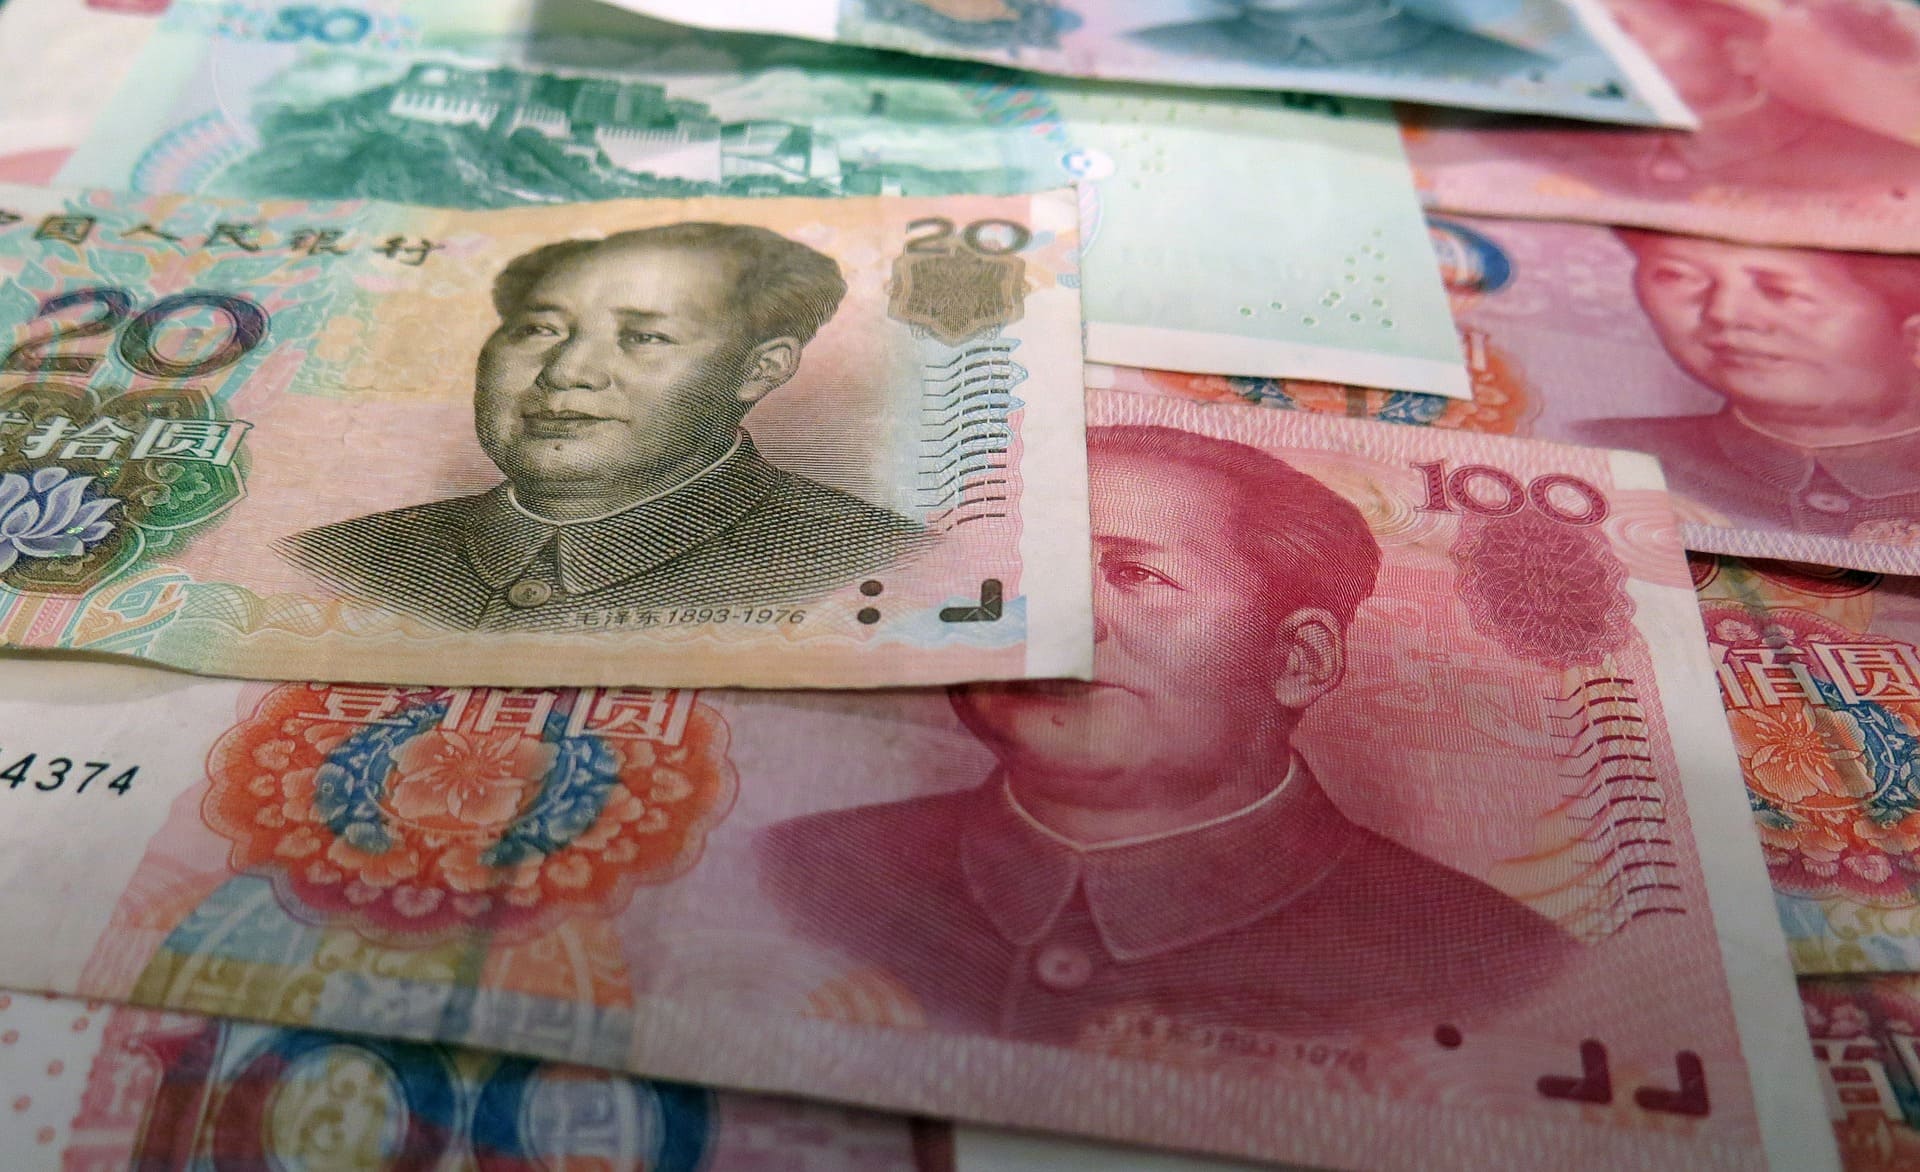 China’s Central Bank Expands More Digital Yuan Pilot Cities